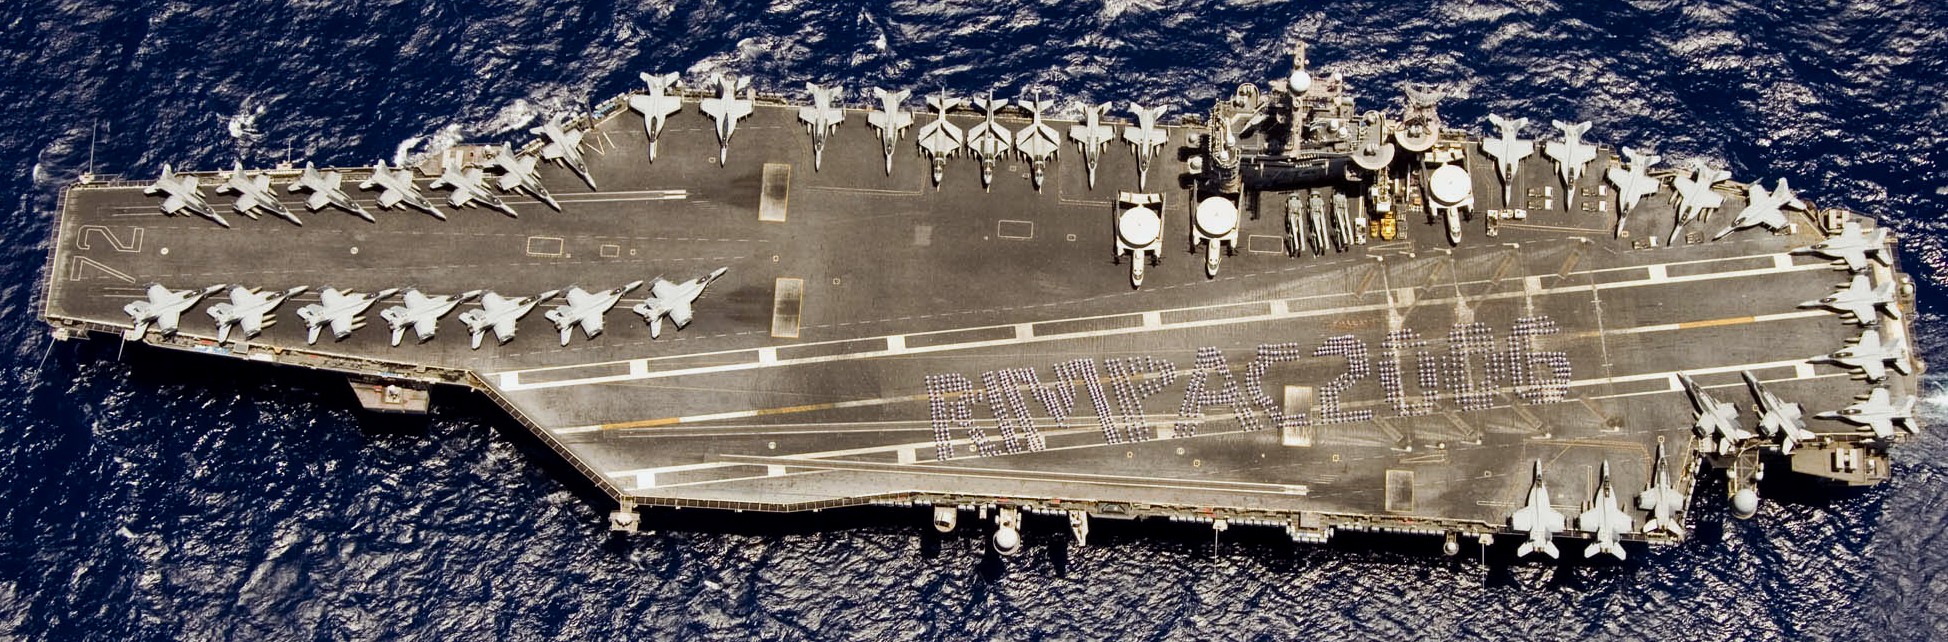 cvn-72 uss abraham lincoln nimitz class aircraft carrier air wing cvw-2 us navy rimpac 2006 103